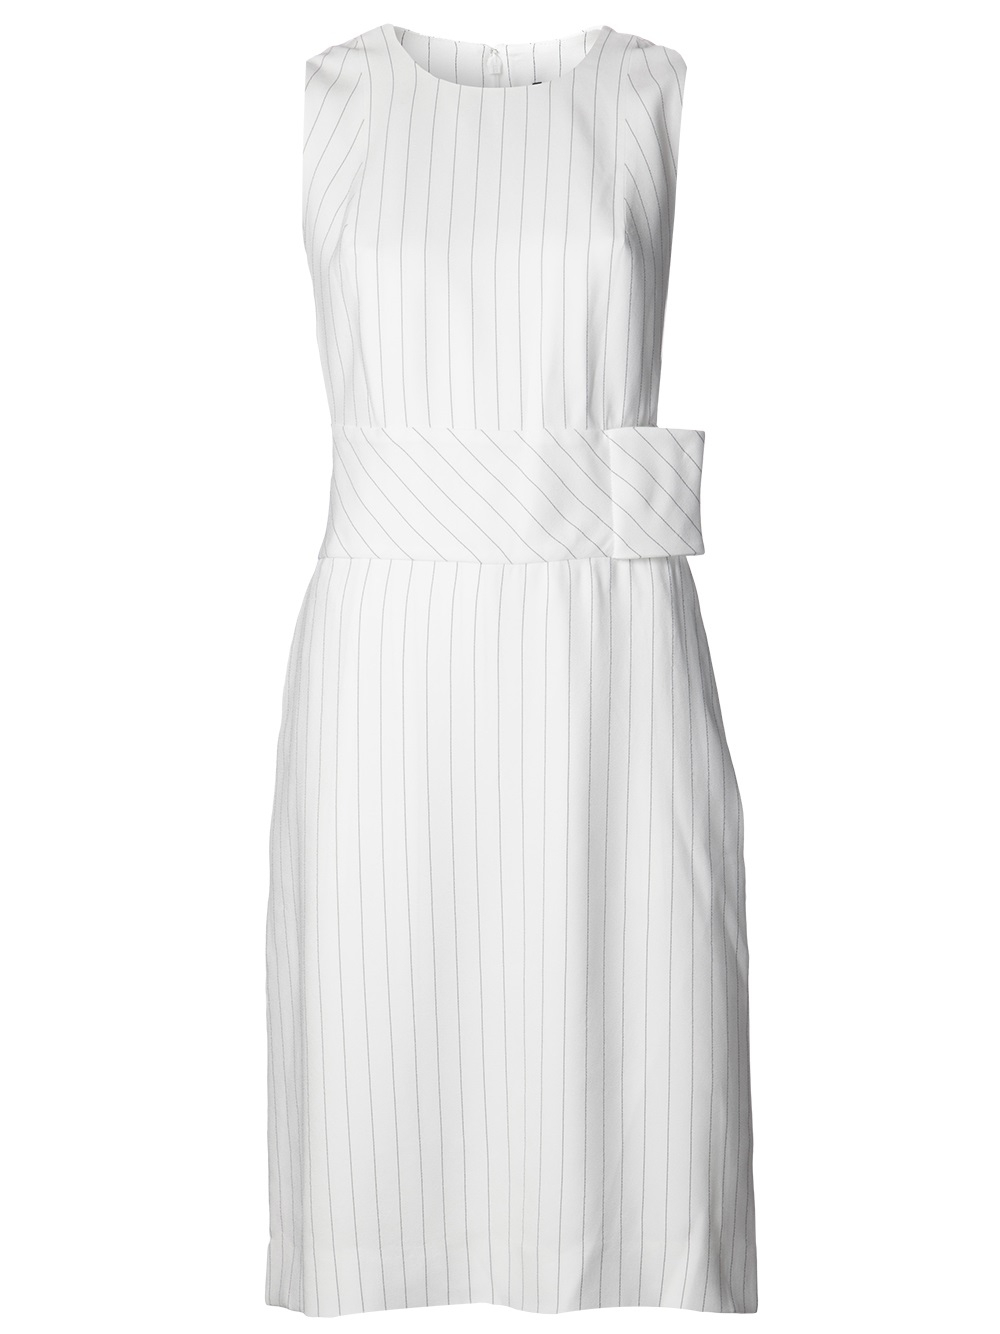 white pinstripe dress